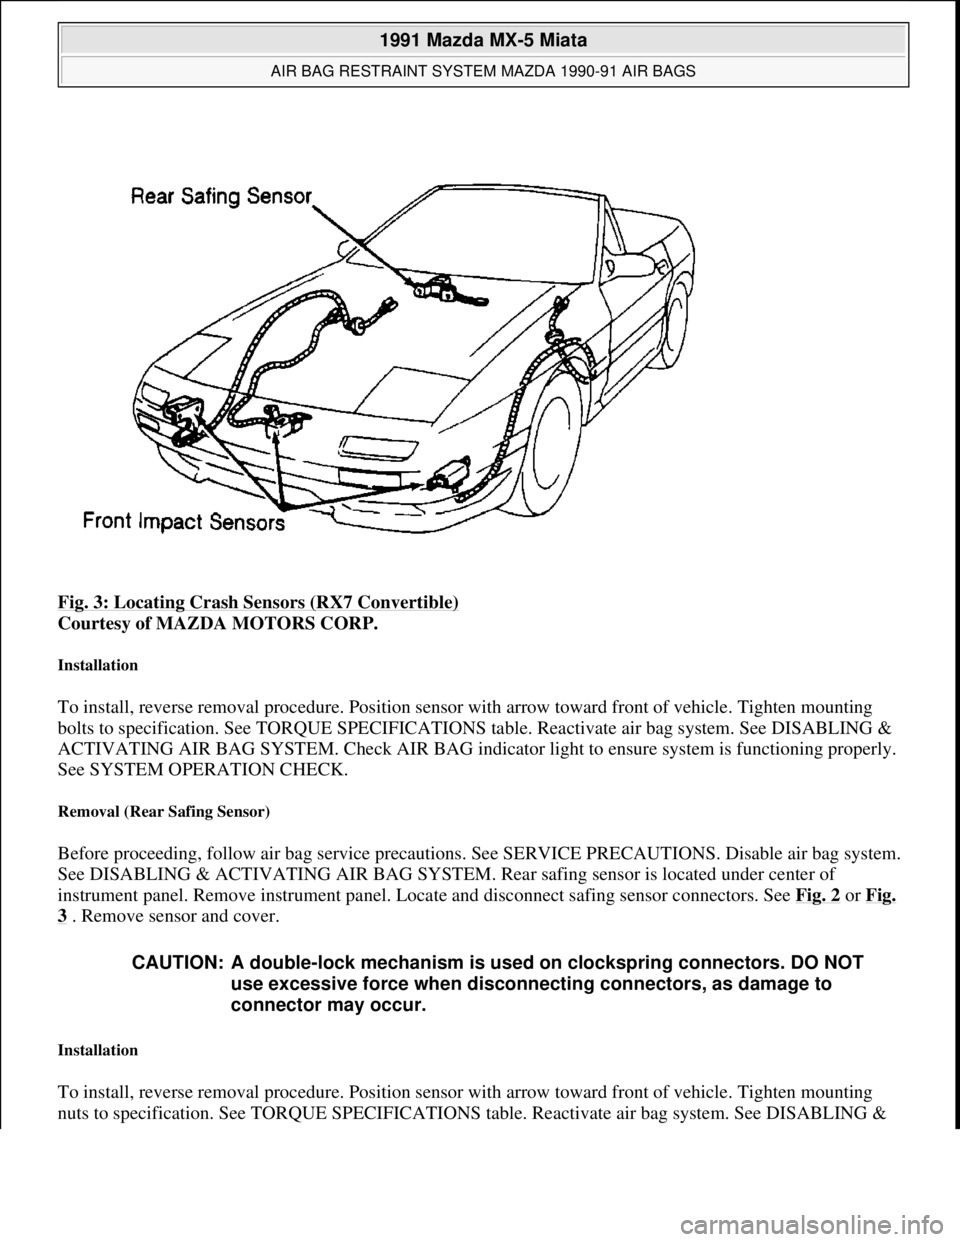 MAZDA MIATA 1991  Factory Service Manual Fig. 3: Locating Crash Sensors (RX7 Convertible) 
Courtesy of MAZDA MOTORS CORP. 
Installation 
To install, reverse removal procedure. Position sensor with arrow toward front of vehicle. Tighten mount